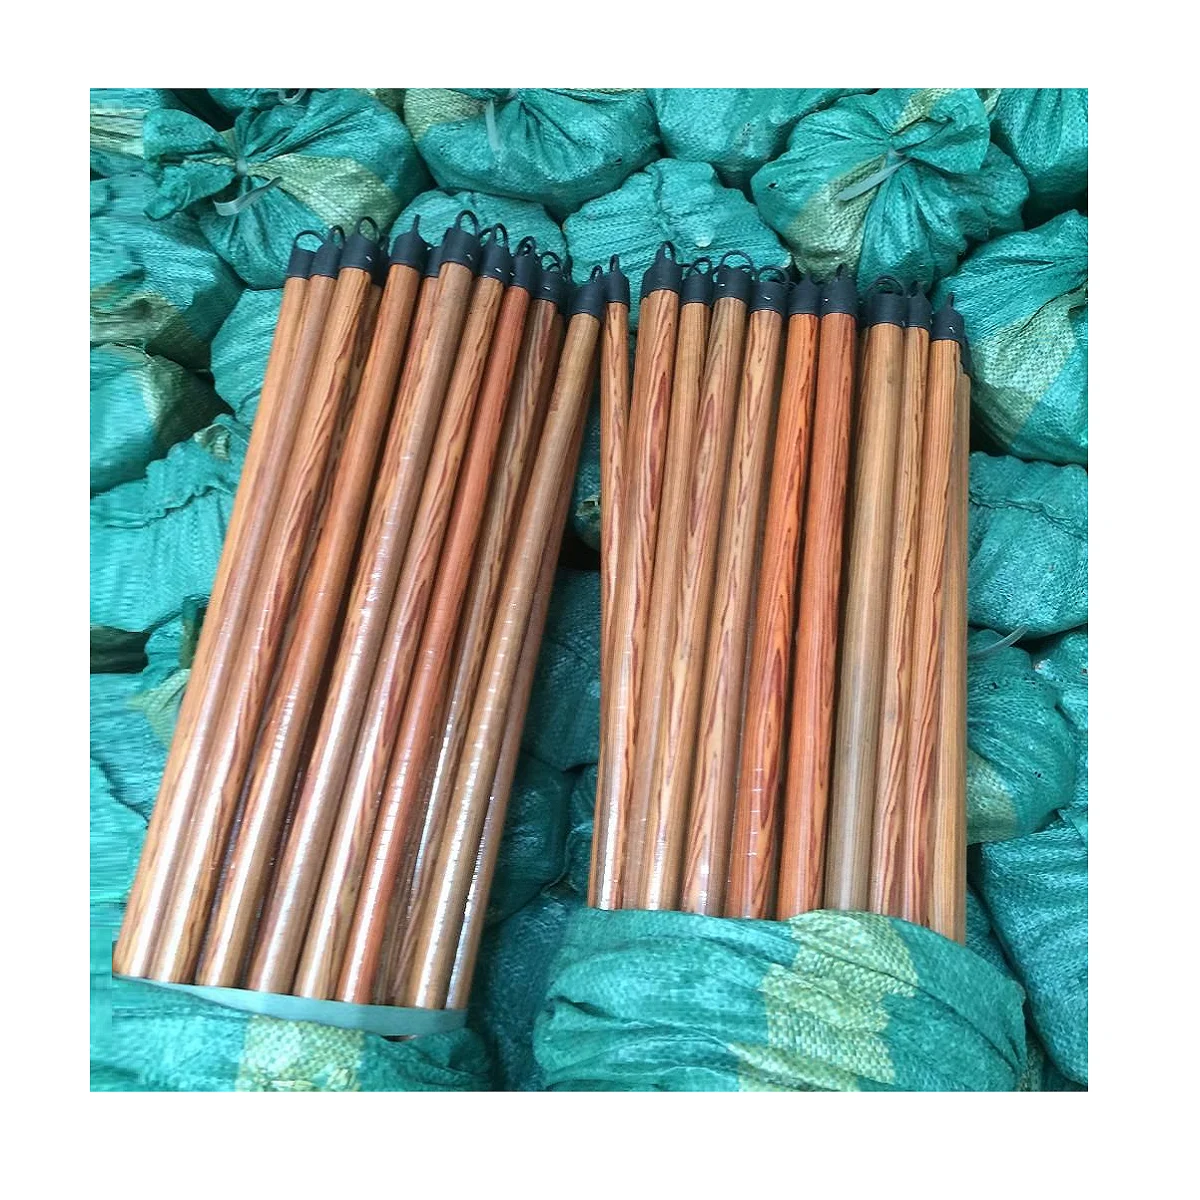 Best selling wooden broom handle eucalyptus wood rods broomstick wholesale exwork cheapest price in Vietnam supply bulk